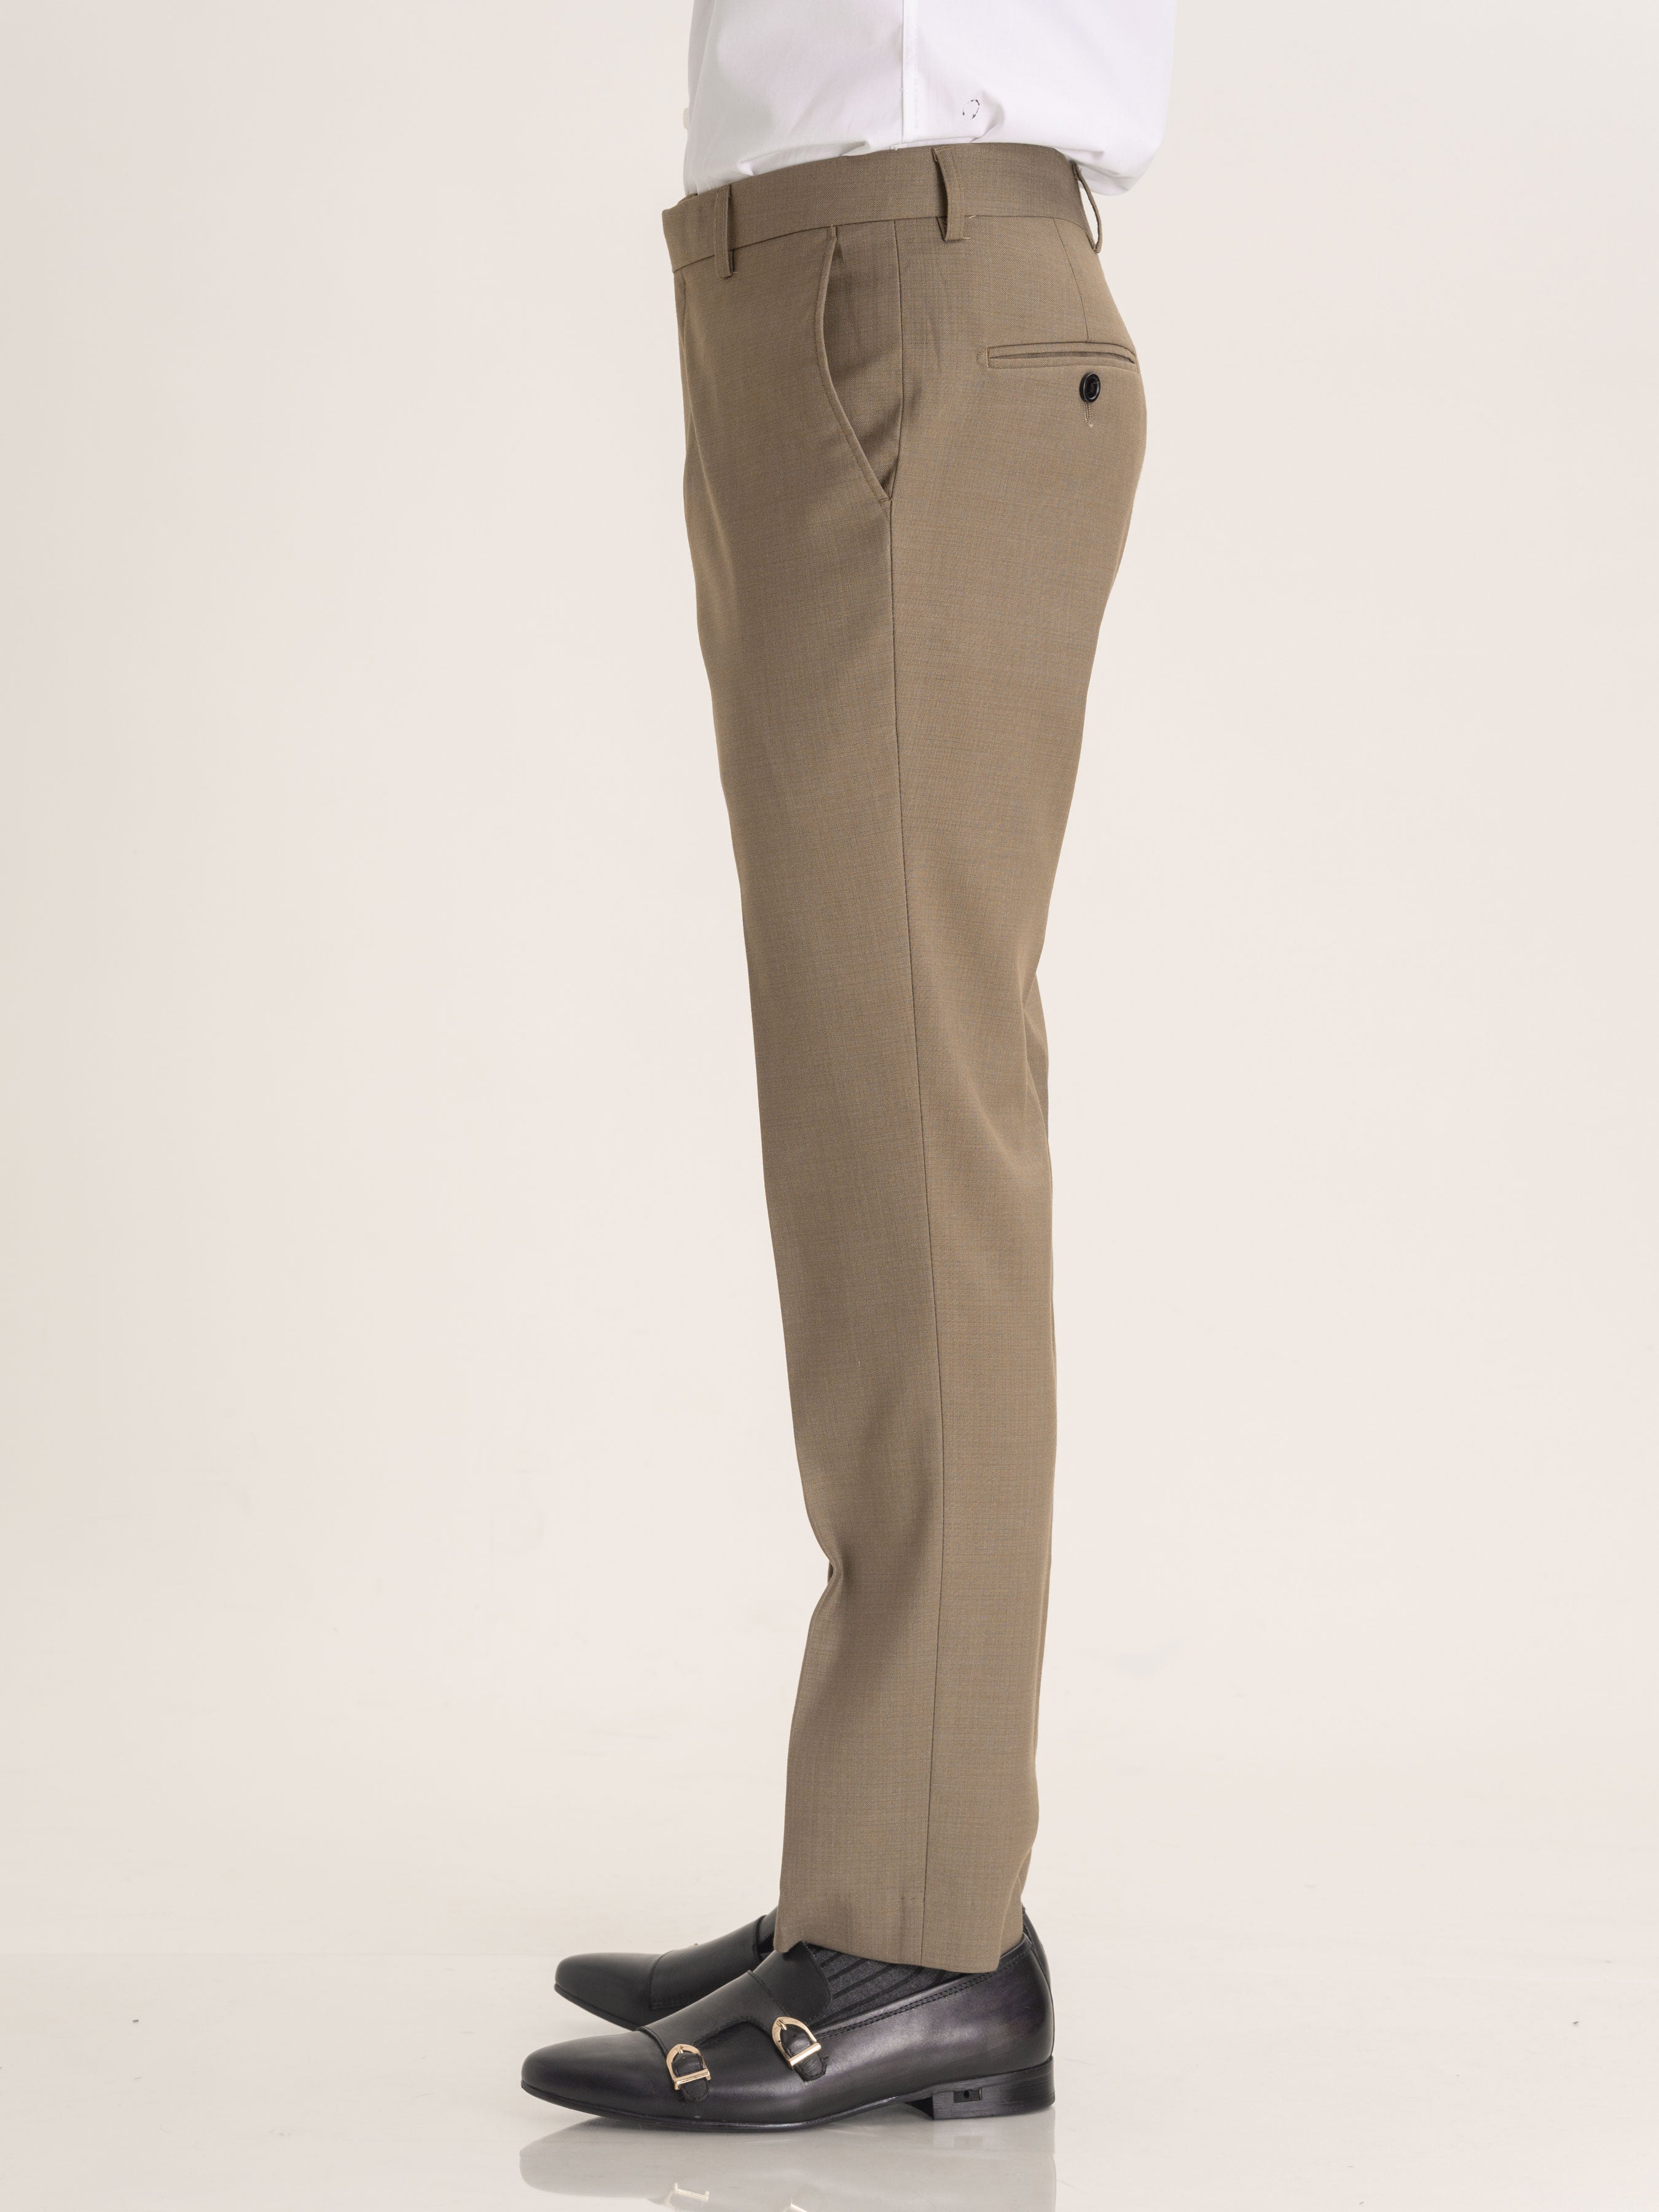 Trousers With Belt Loop - Khakis Plain (Stretchable) | Zeve Shoes